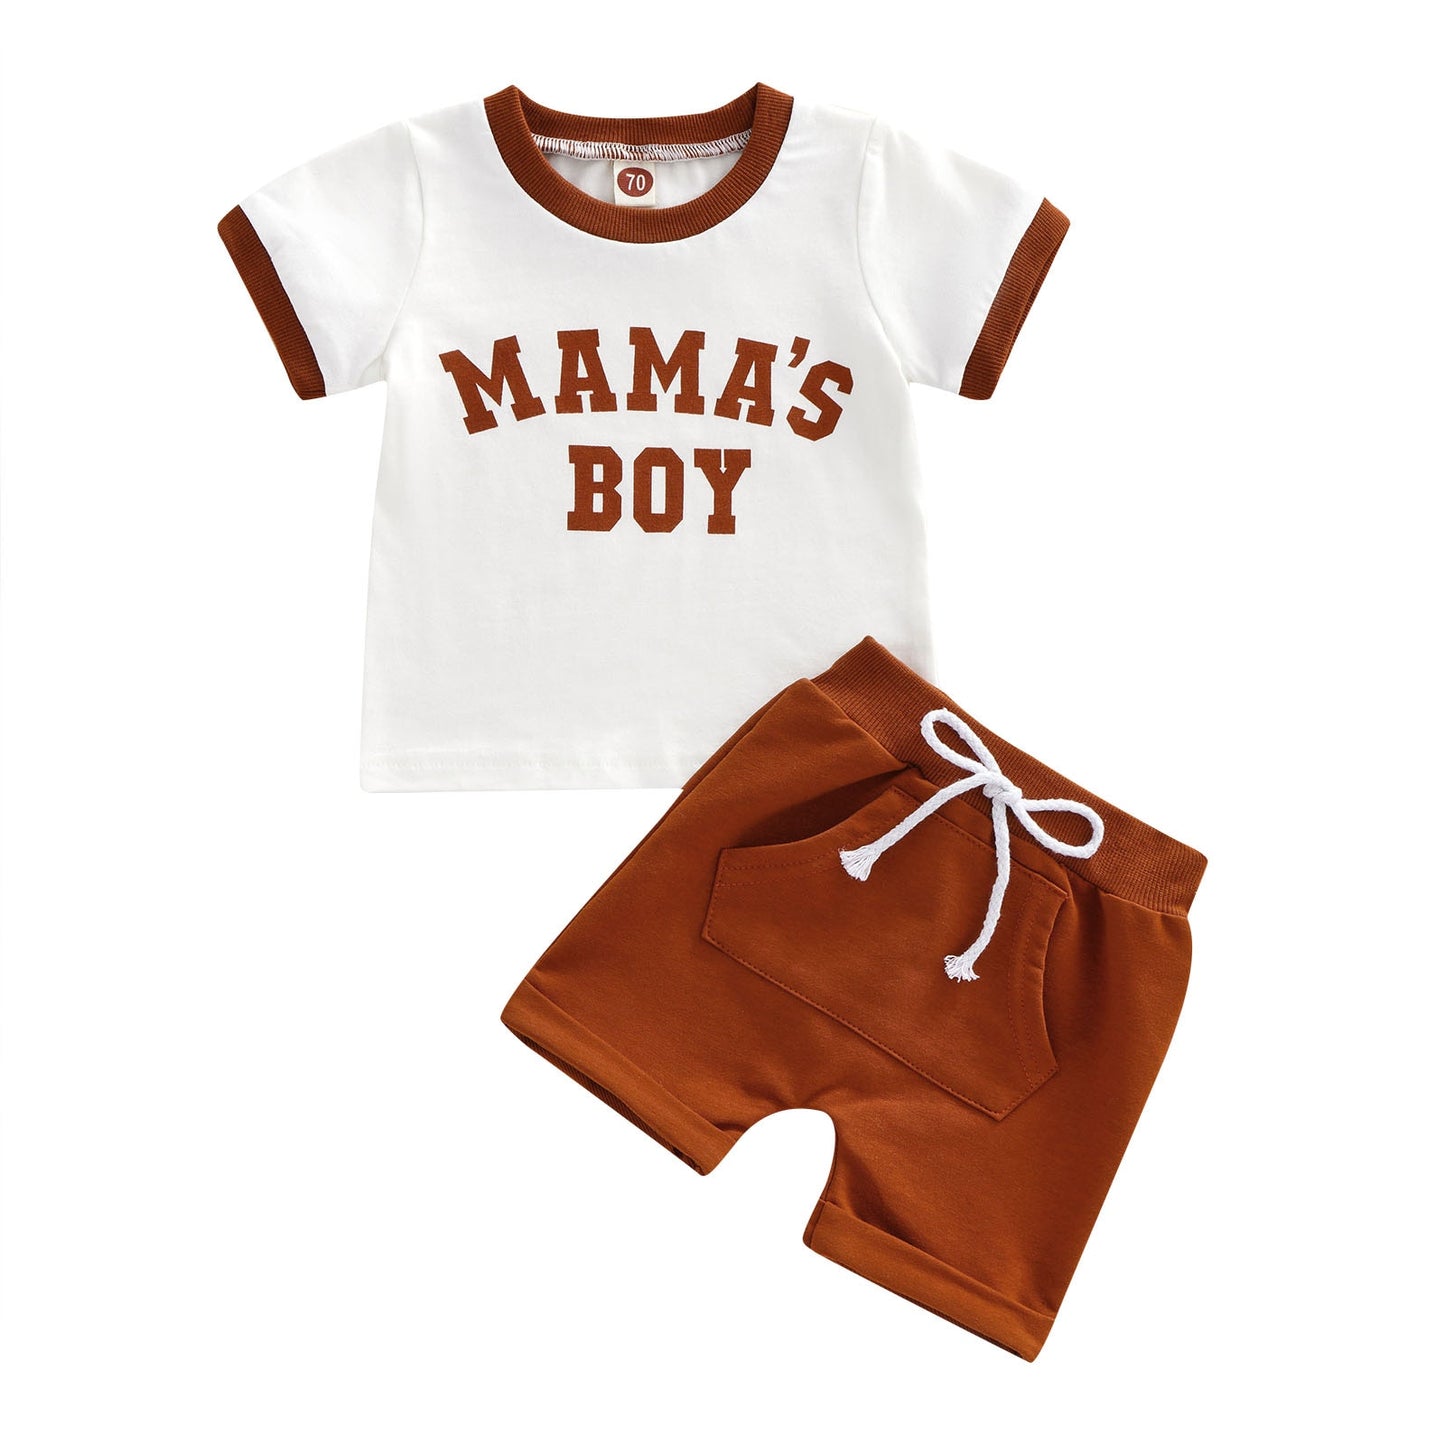 Mama's Boy Short-Sleeve Set